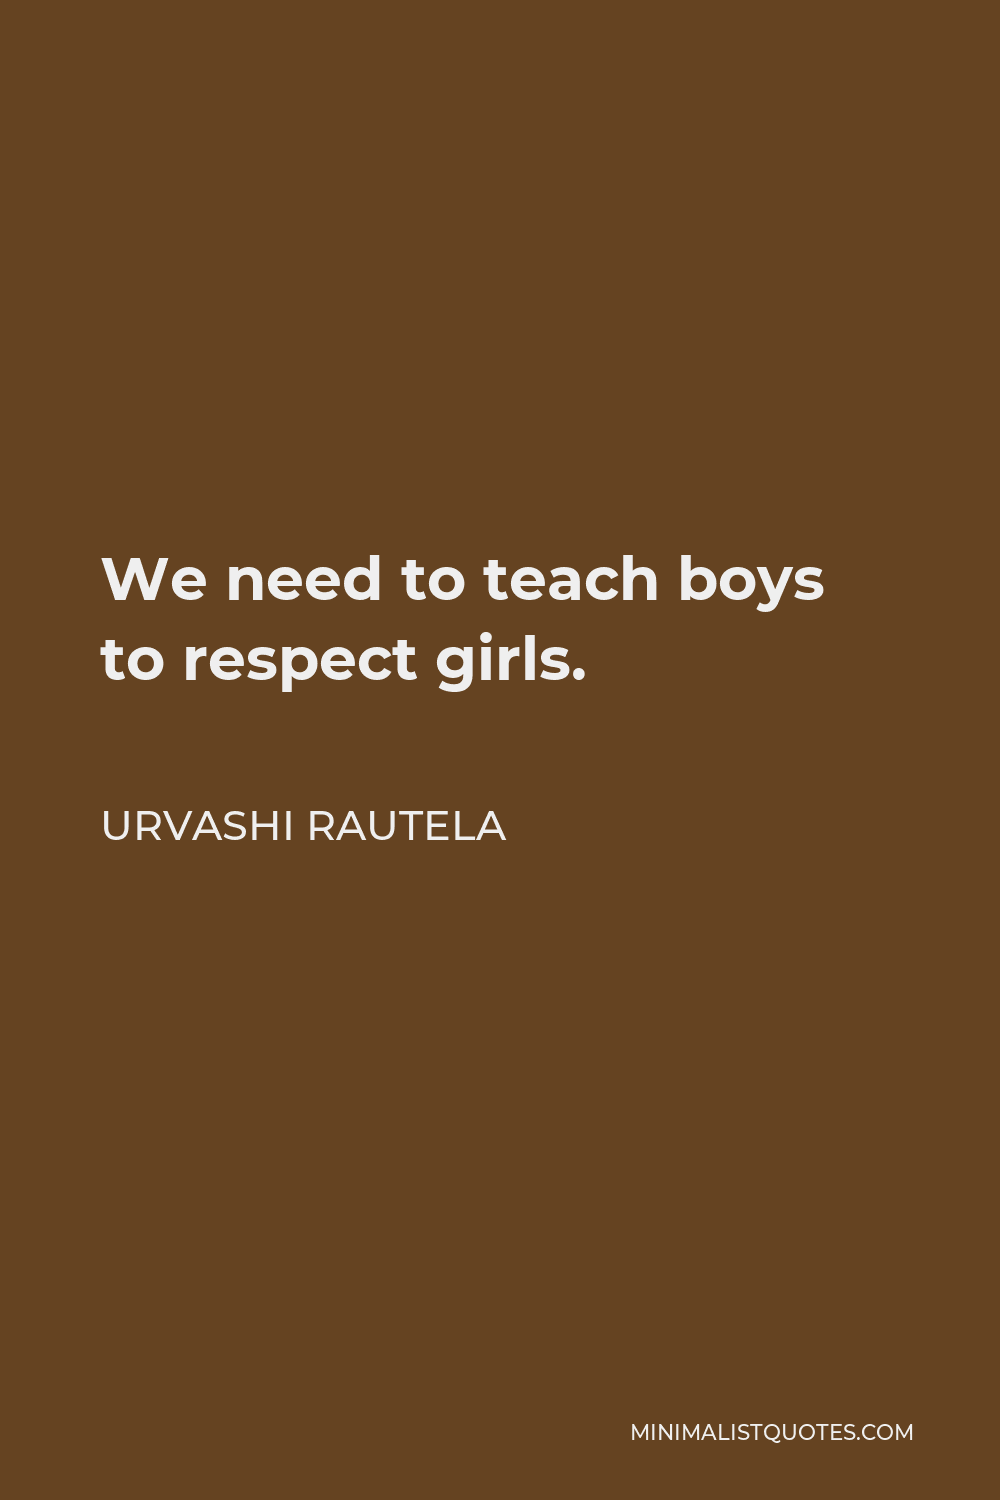 Urvashi Rautela Quote - We need to teach boys to respect girls.